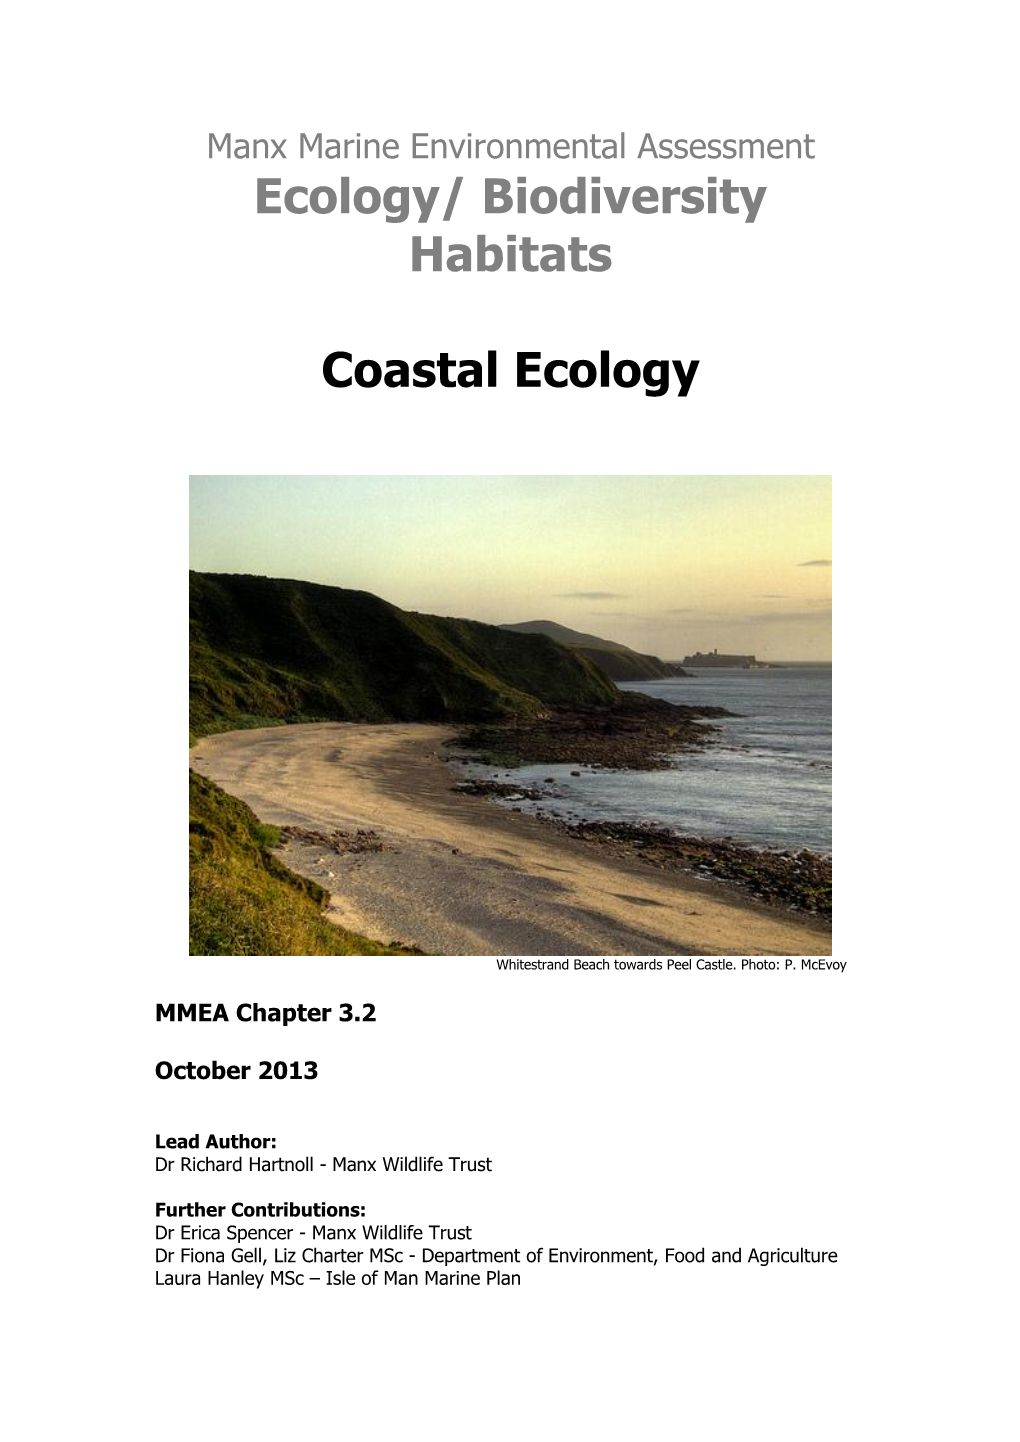 Manx Marine Environmental Assessment Ecology/ Biodiversity Habitats